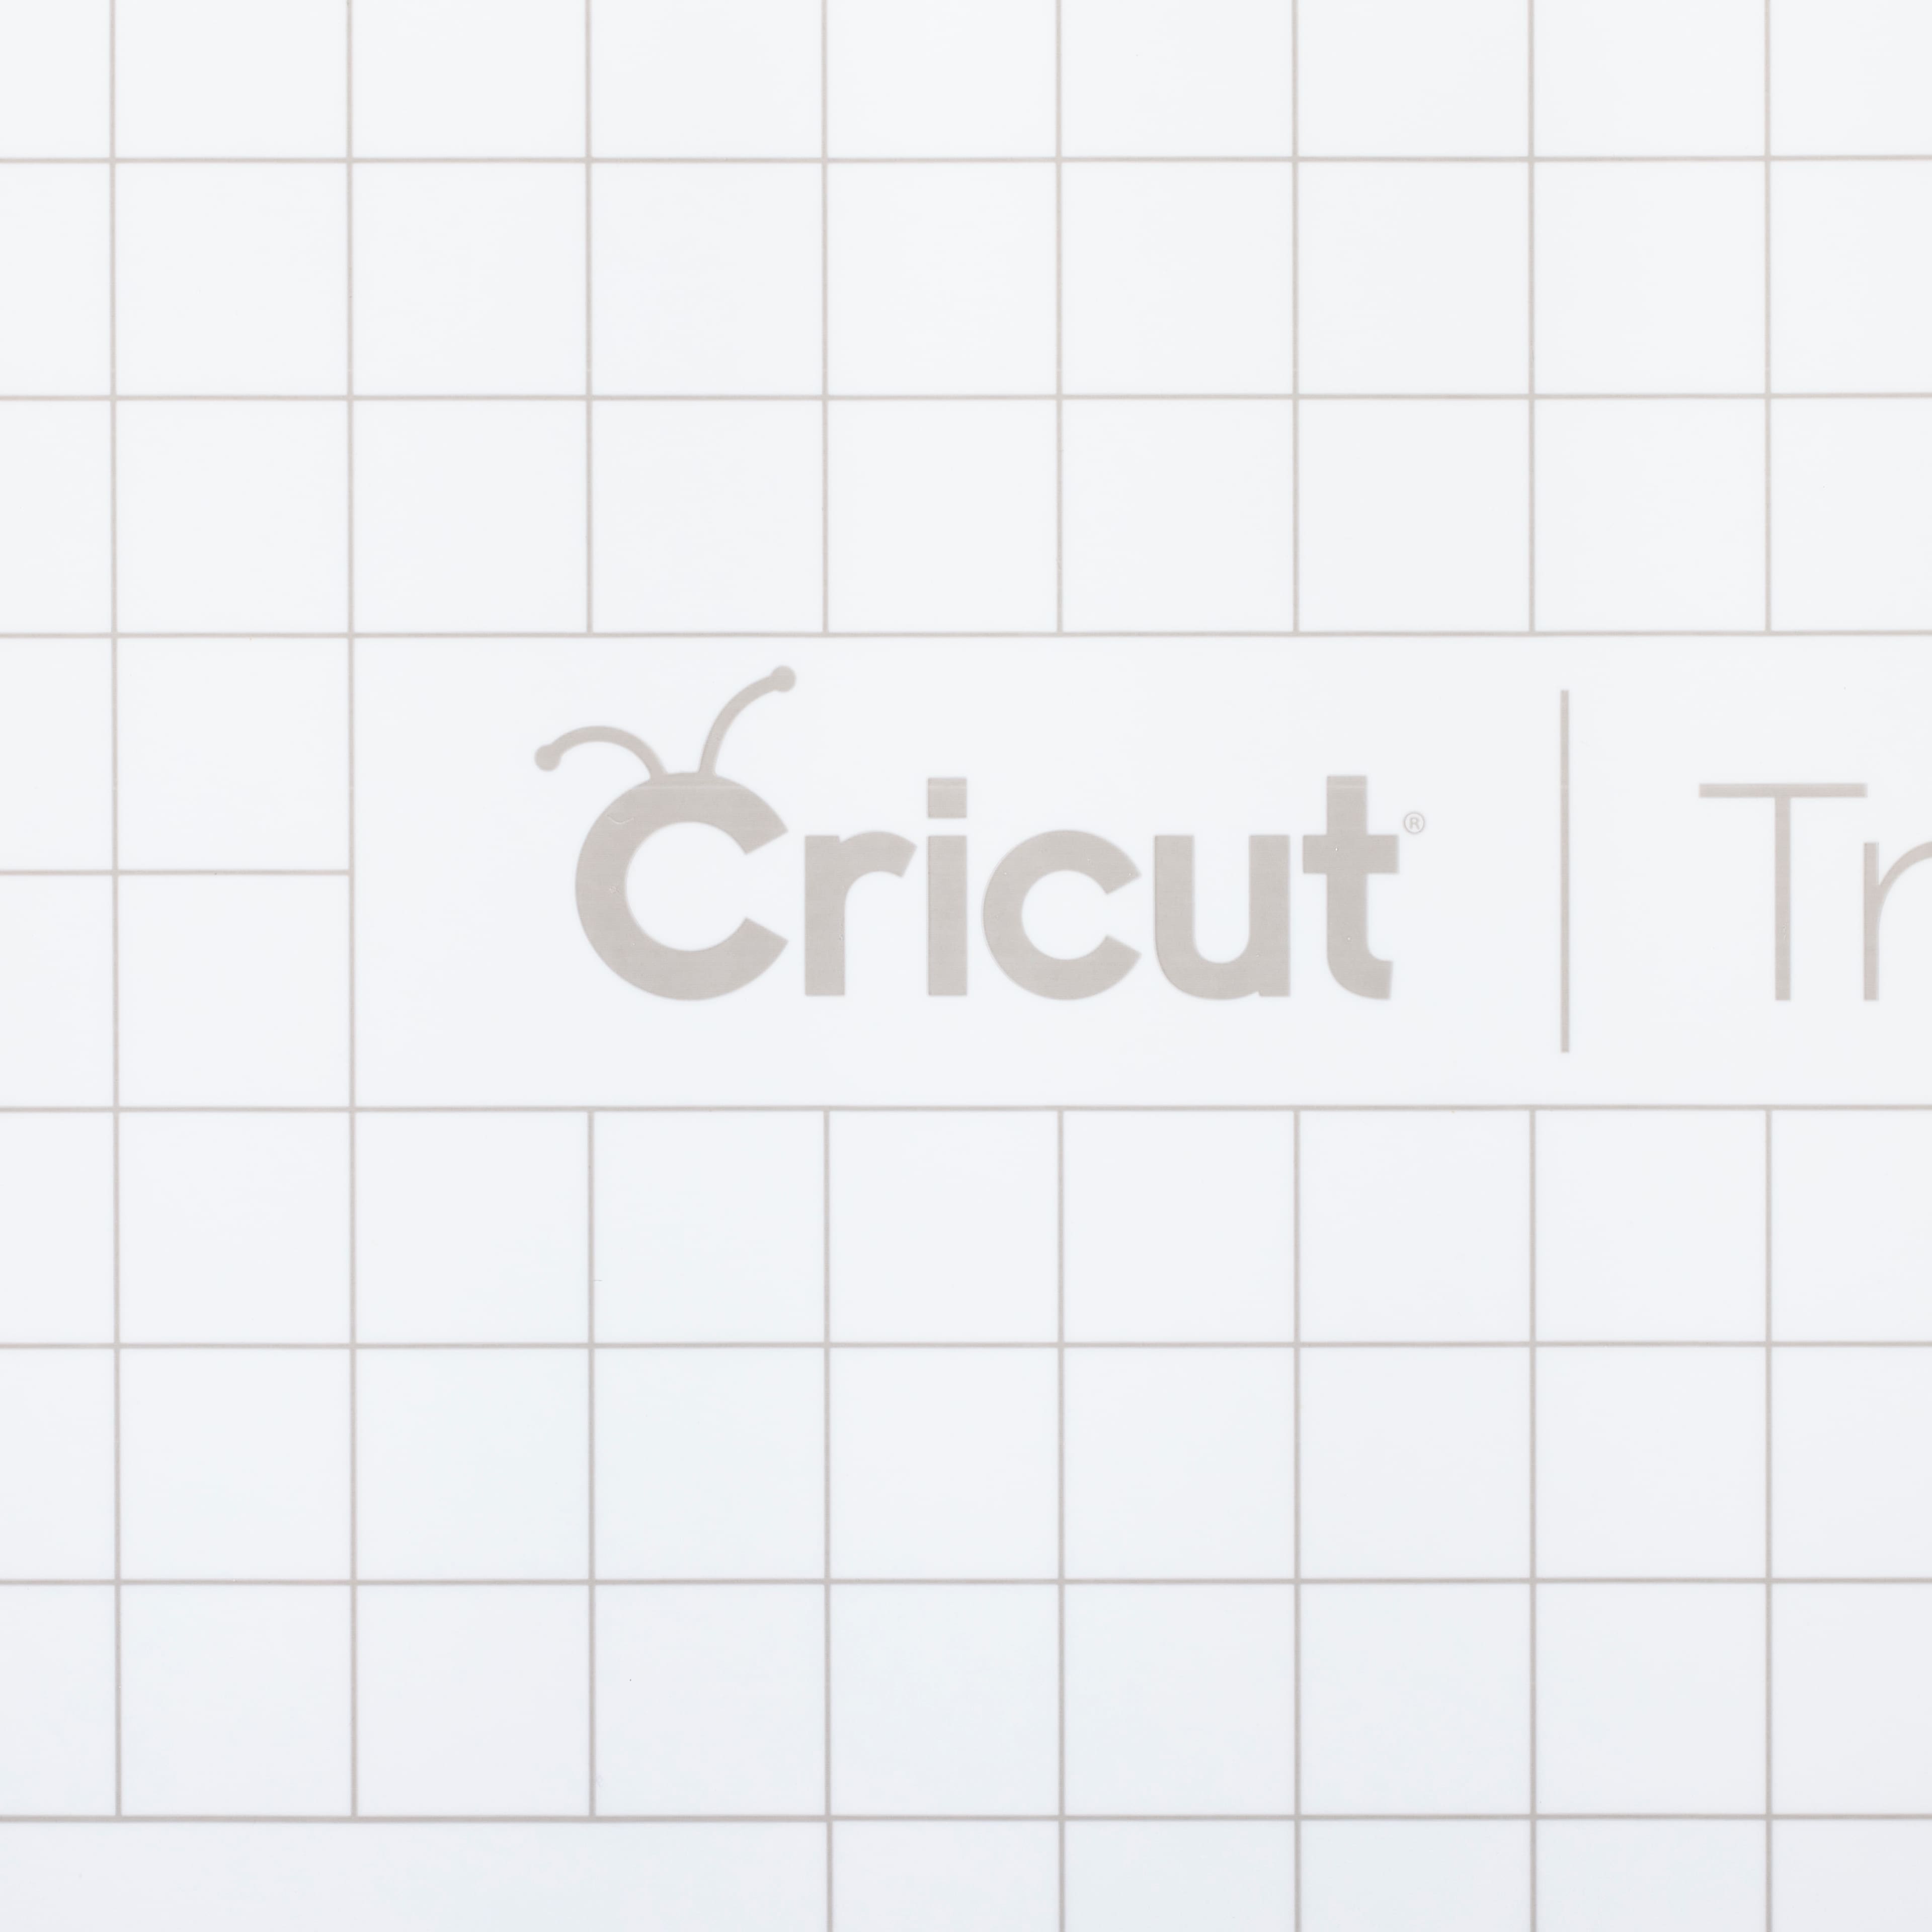 Cricut Transfer Tape Clear 13.9 cm x 121.9 cm - Abakhan